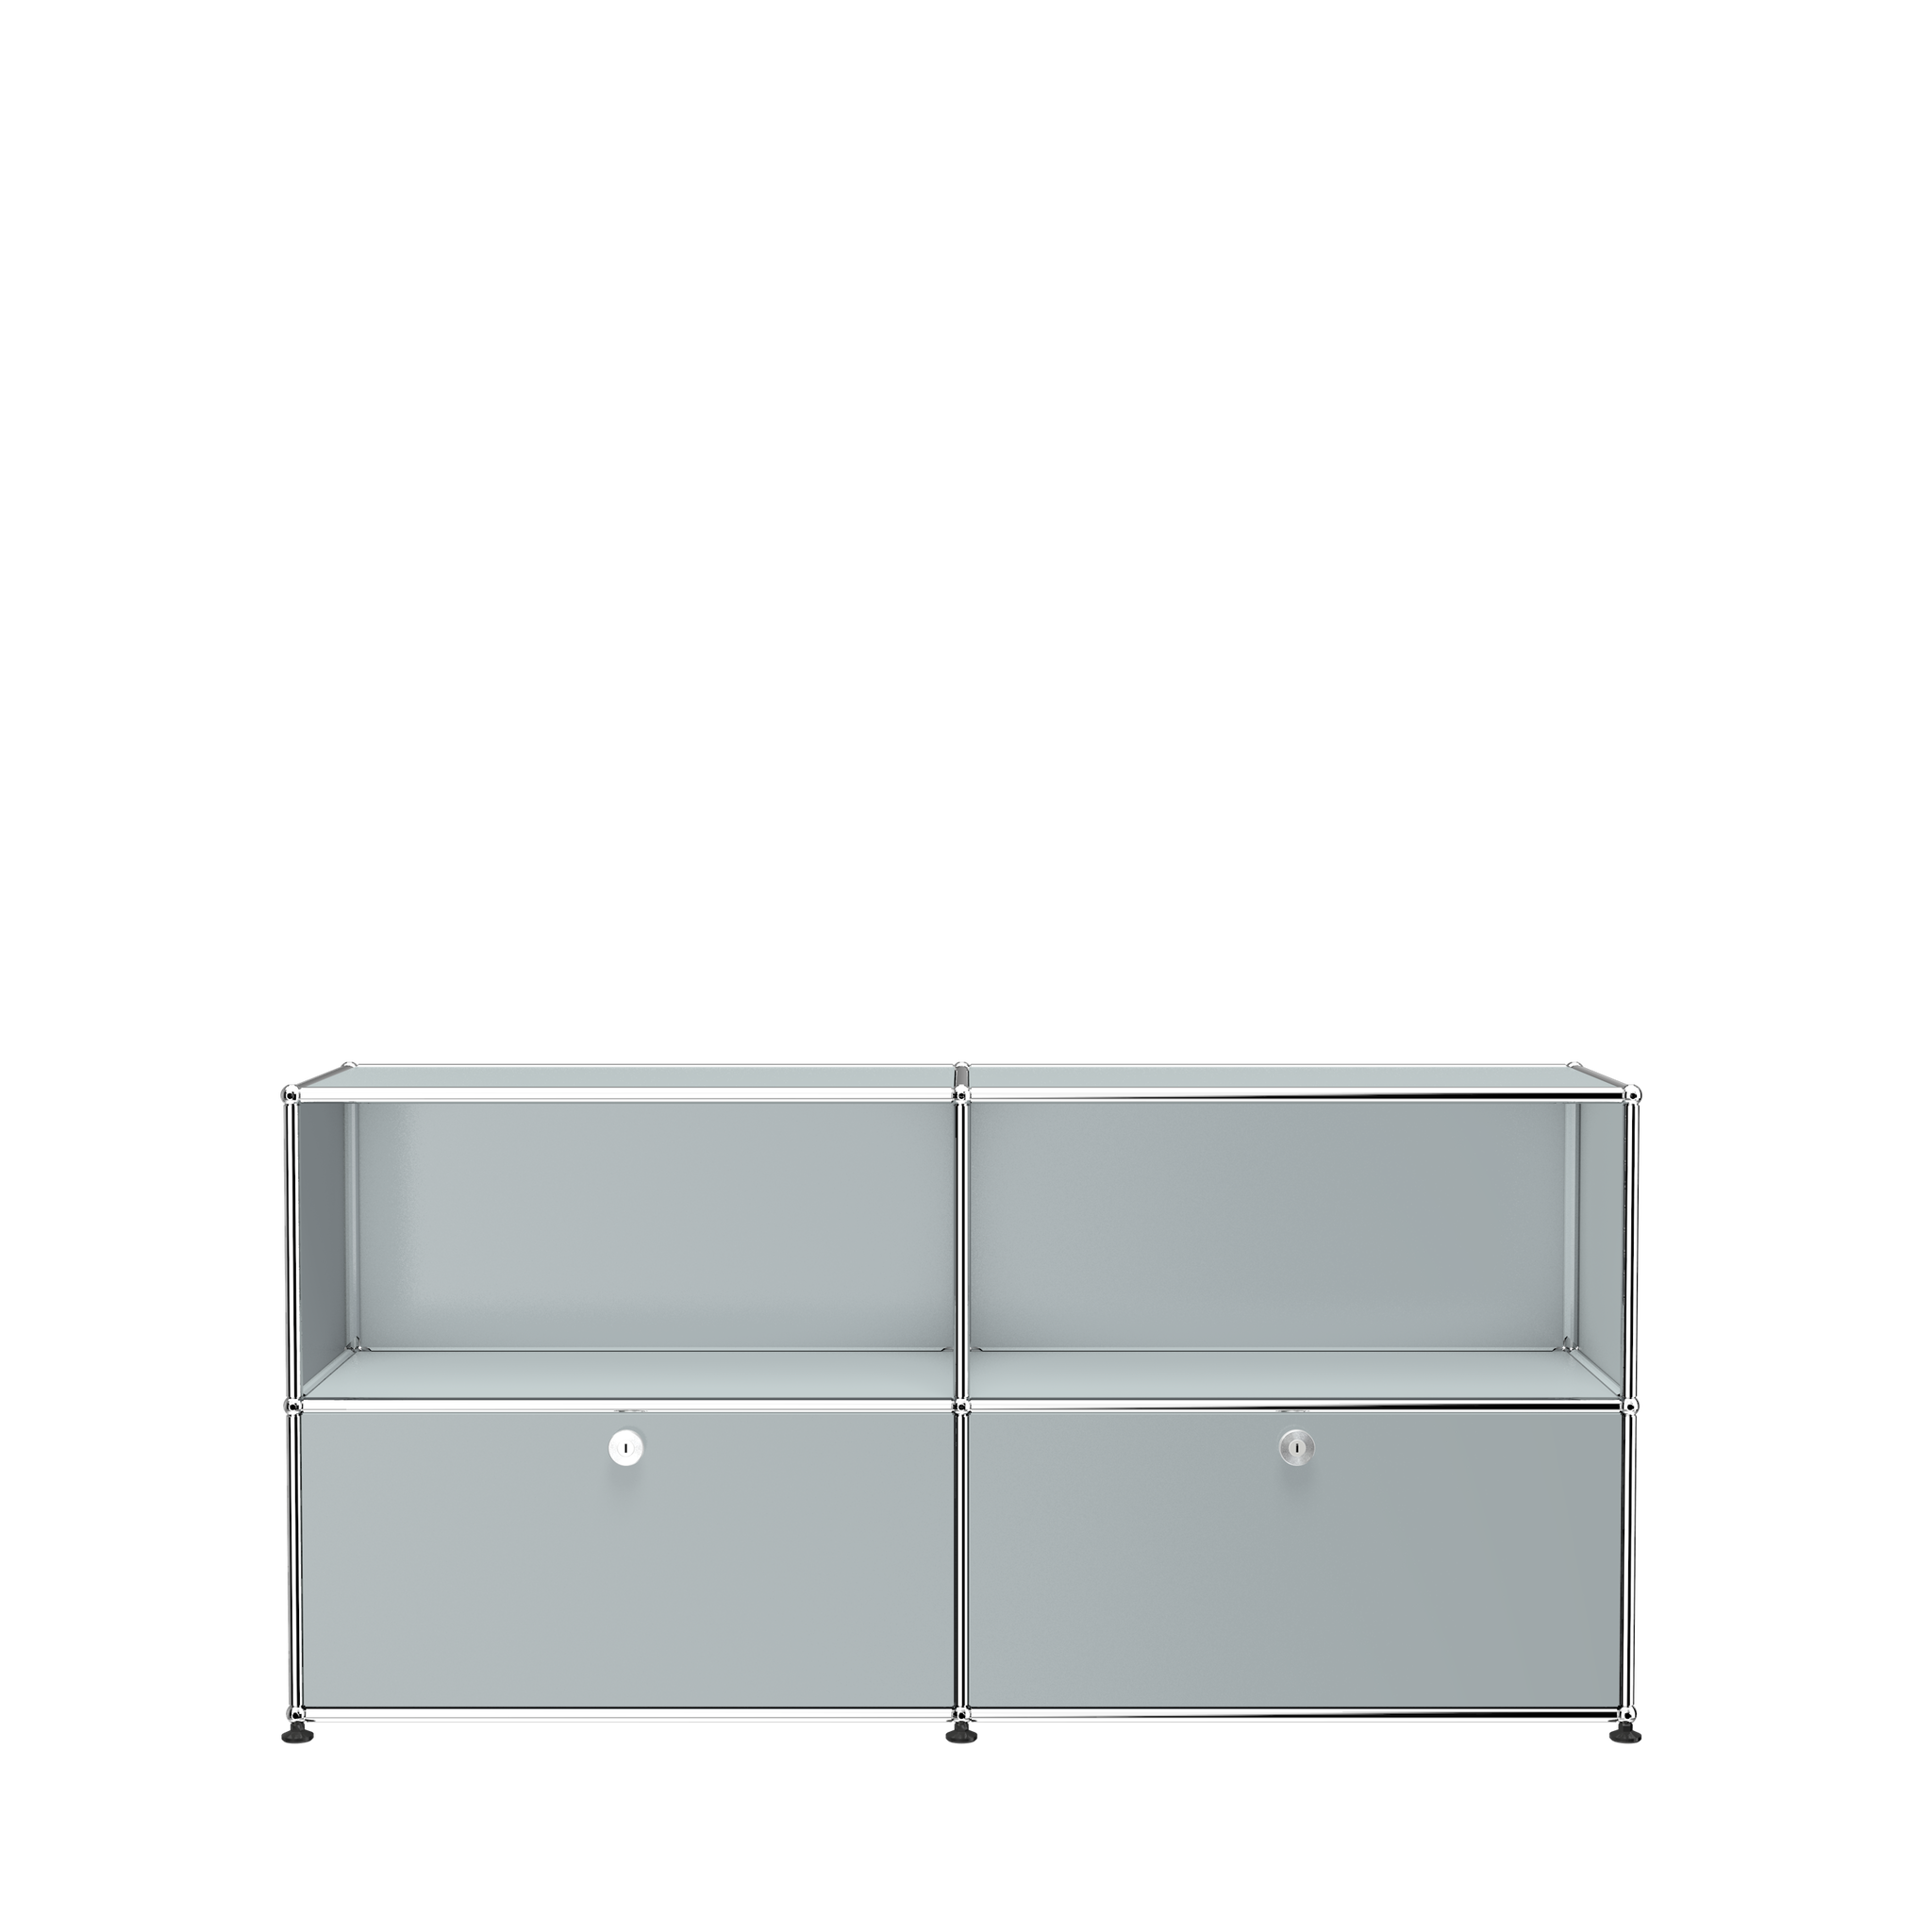 USM Haller Steel 2 Door Credenza File Cabinet (C2A) in Matte Silver